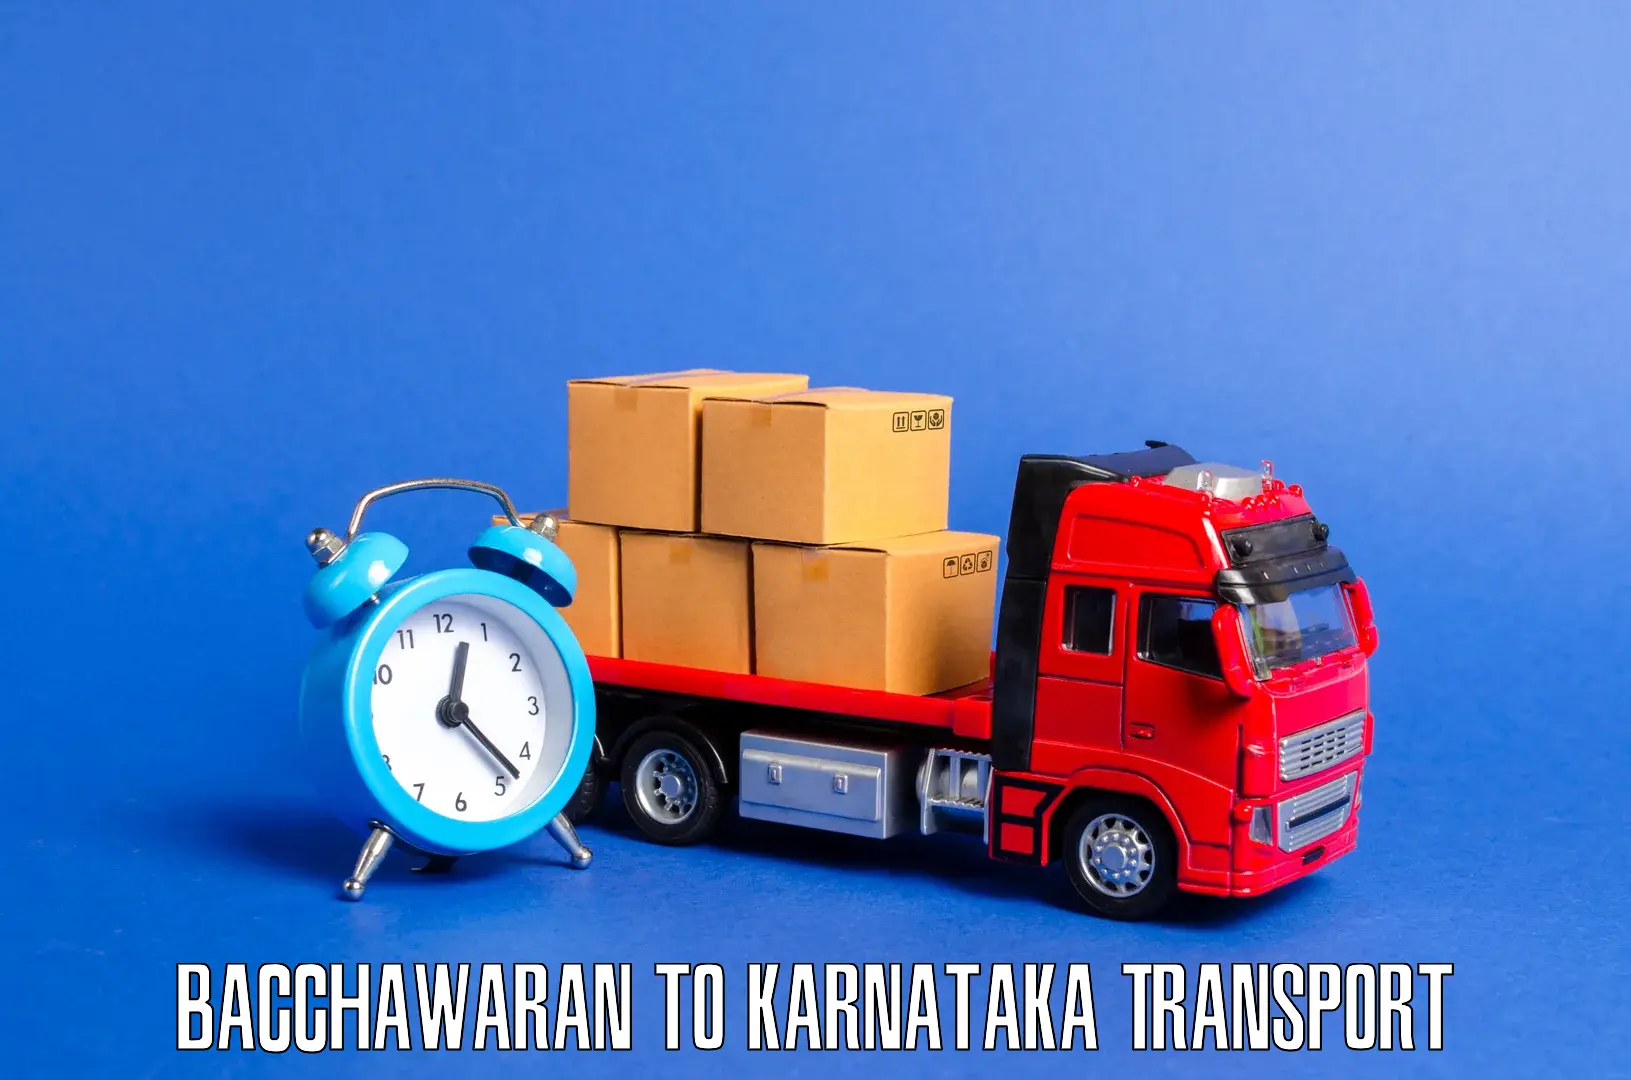 Daily transport service Bacchawaran to Karnataka